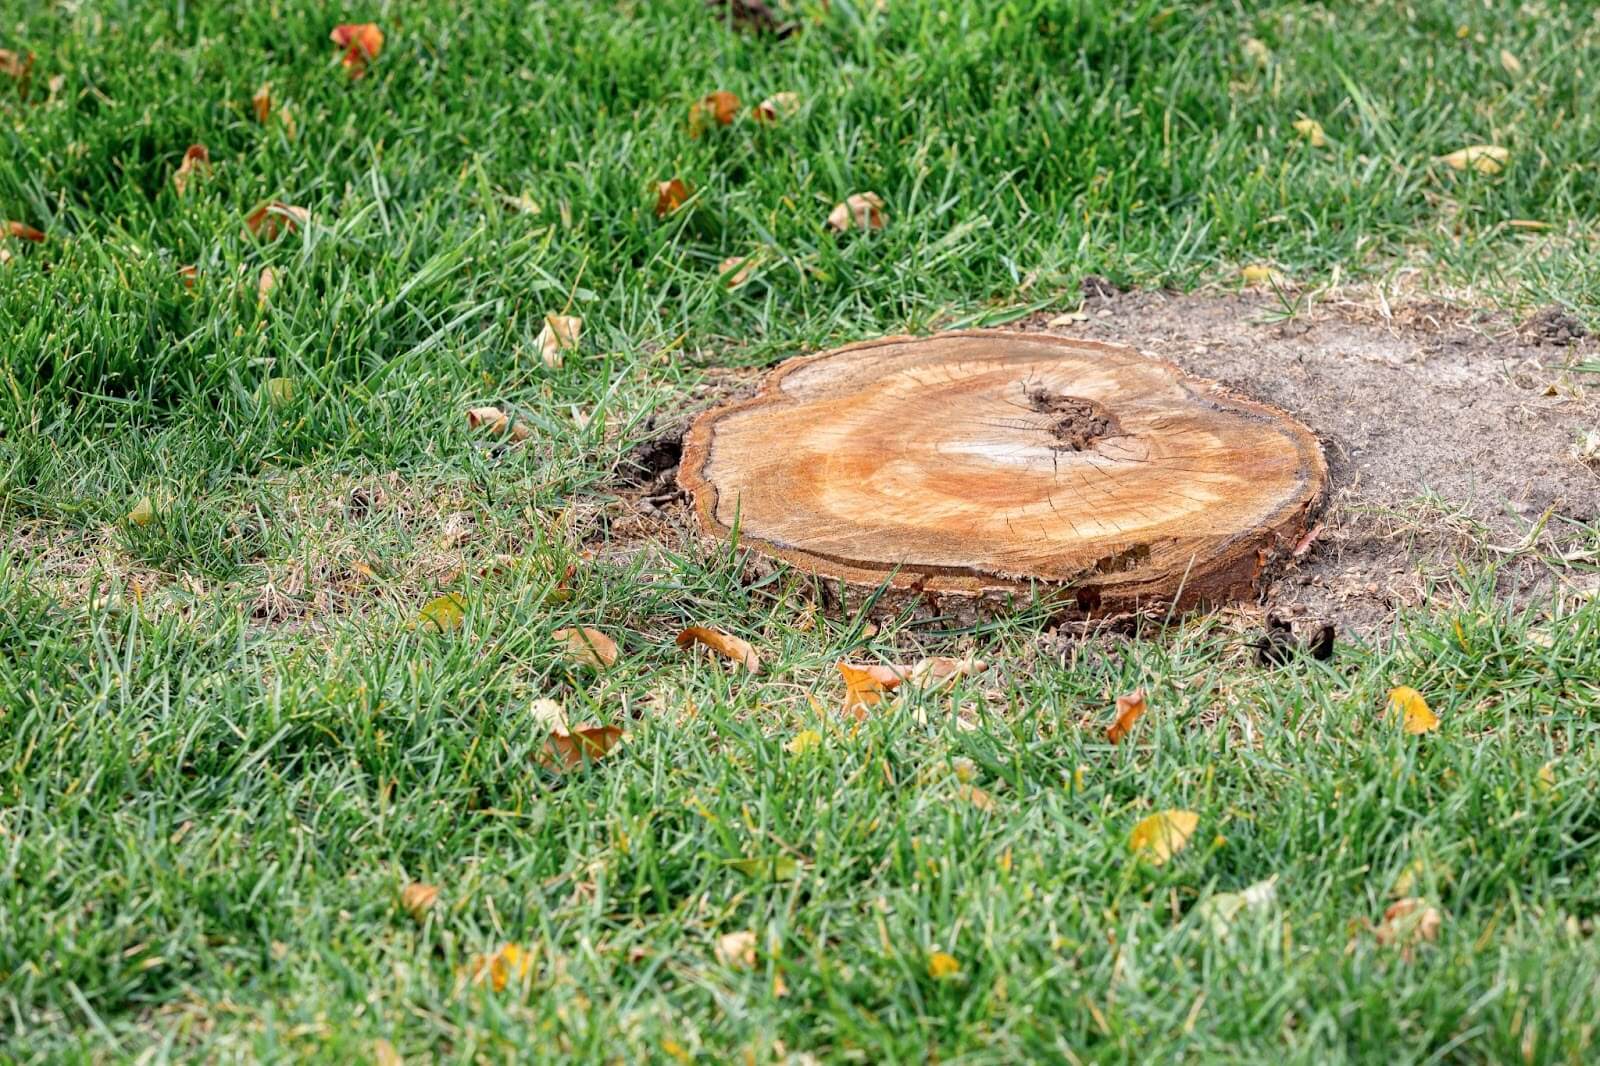 Tree stump in a yard.